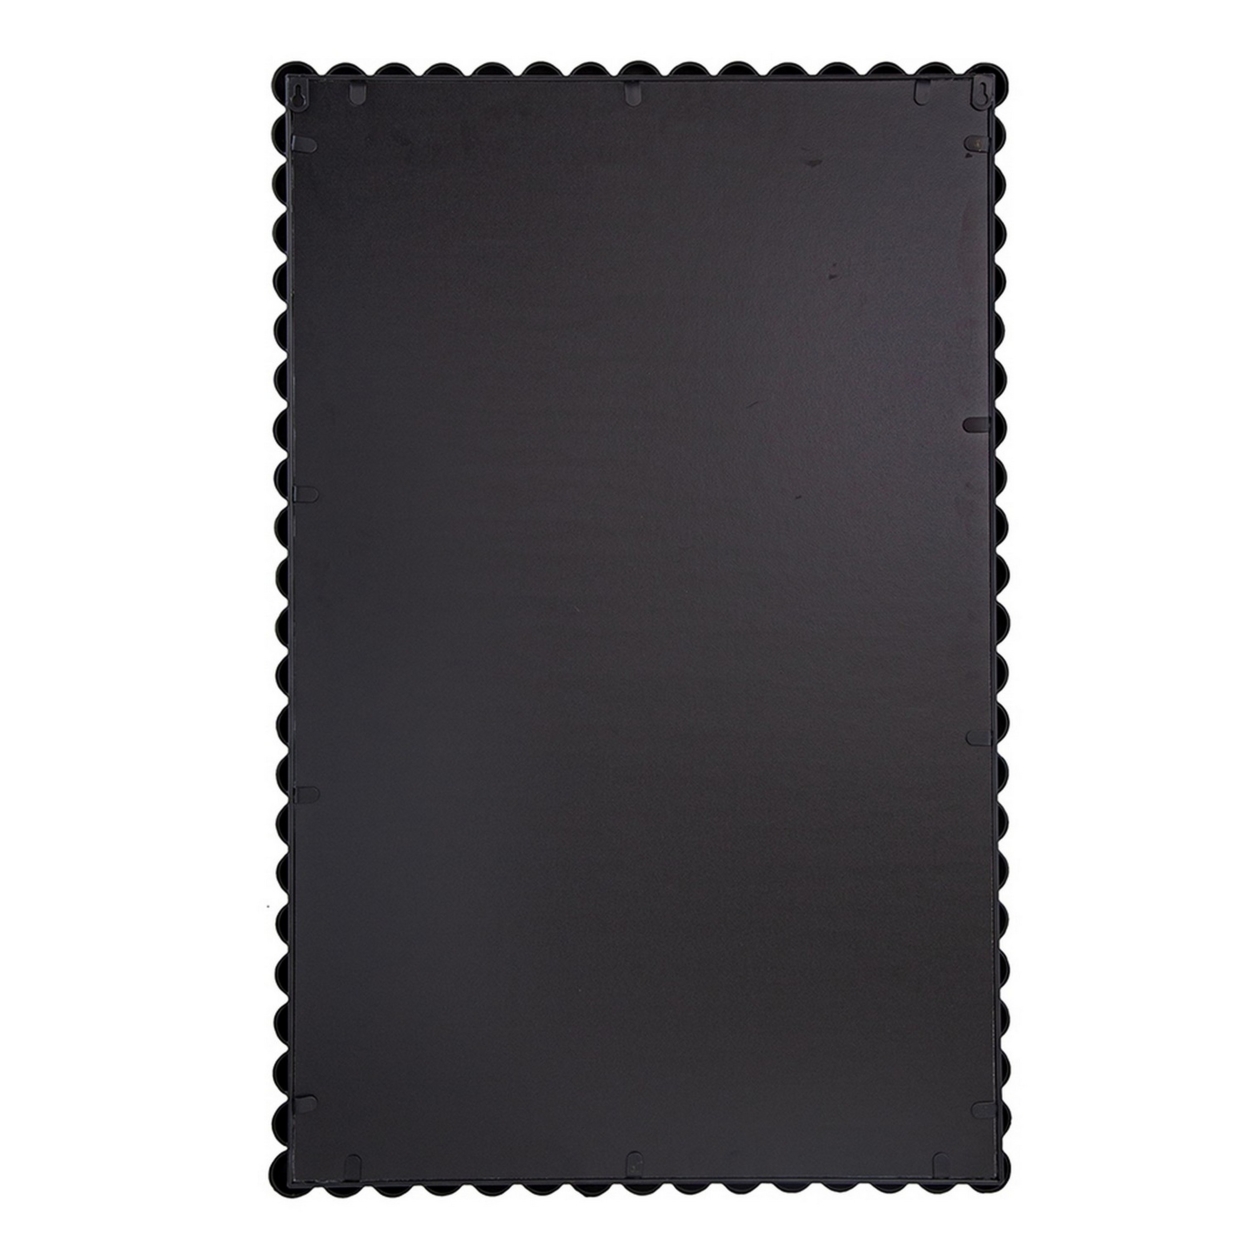 Emu 36 Inch Modern Wall Mirror, Beaded Black Rectangular Metal Frame- Saltoro Sherpi